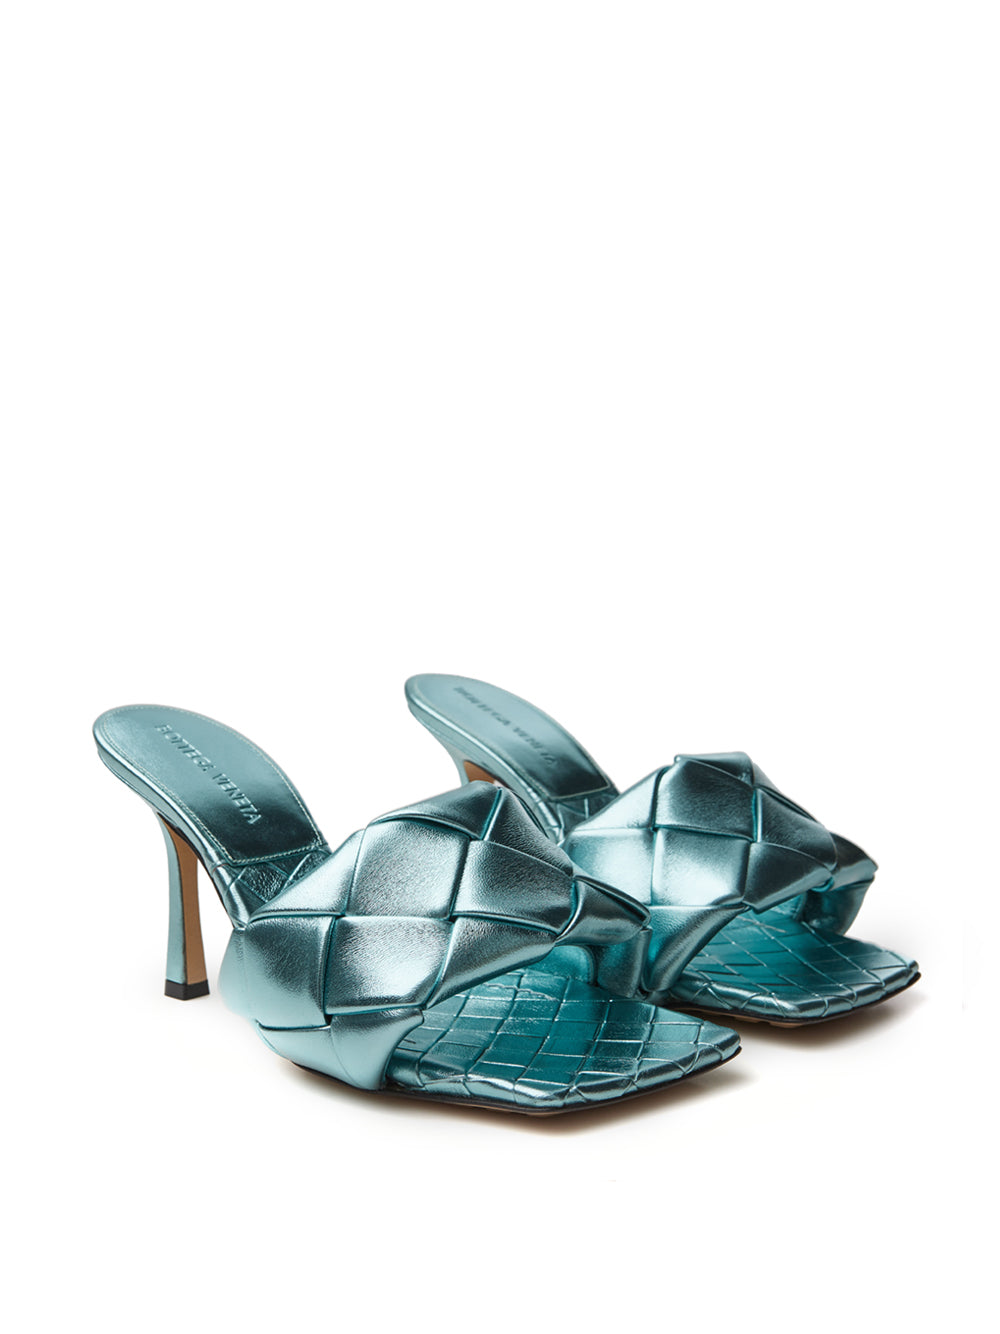 Bottega Veneta Lido Mule Sandal in Metallic Light Blue